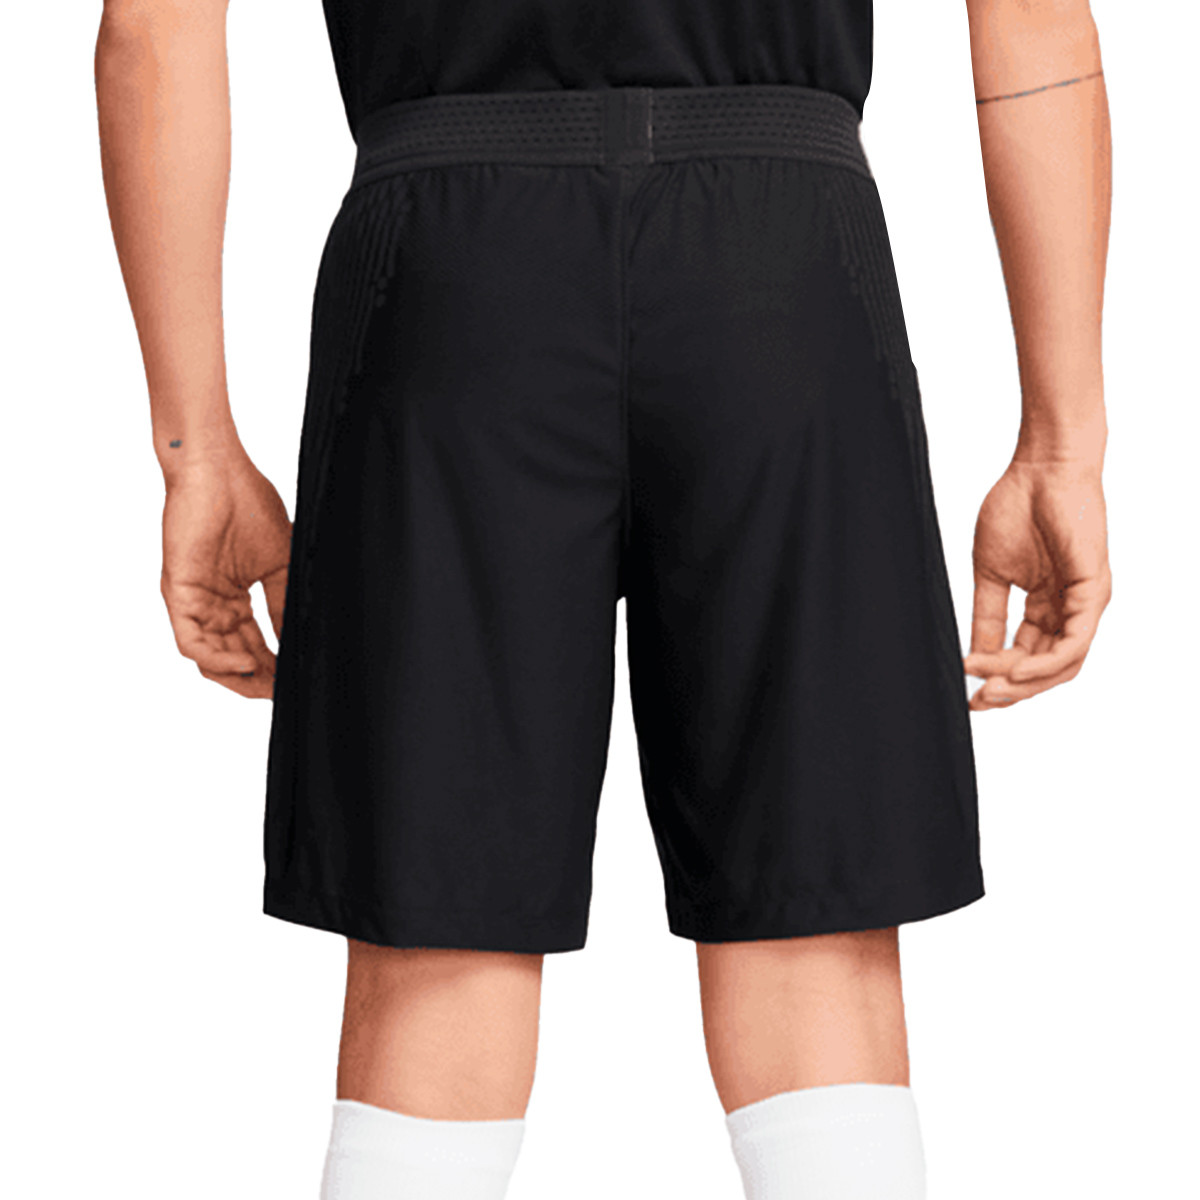 Solitario Eh Presa Pantalón corto Nike VaporKnit III Black-White - Fútbol Emotion